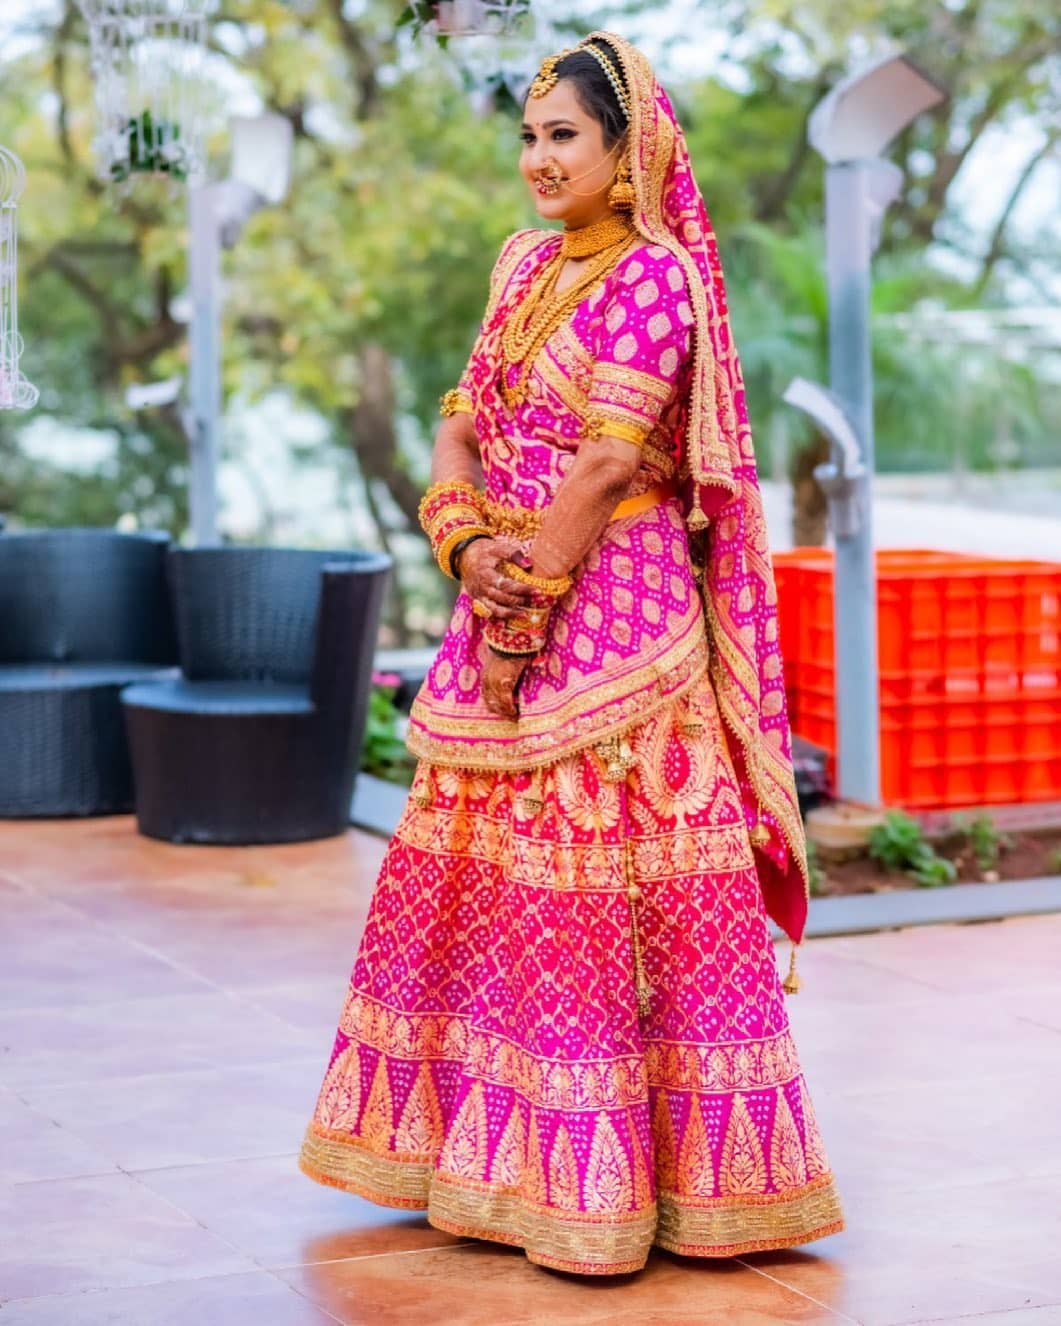 Rajshri fashions Indian Wedding Bridal Lehenga Sarees